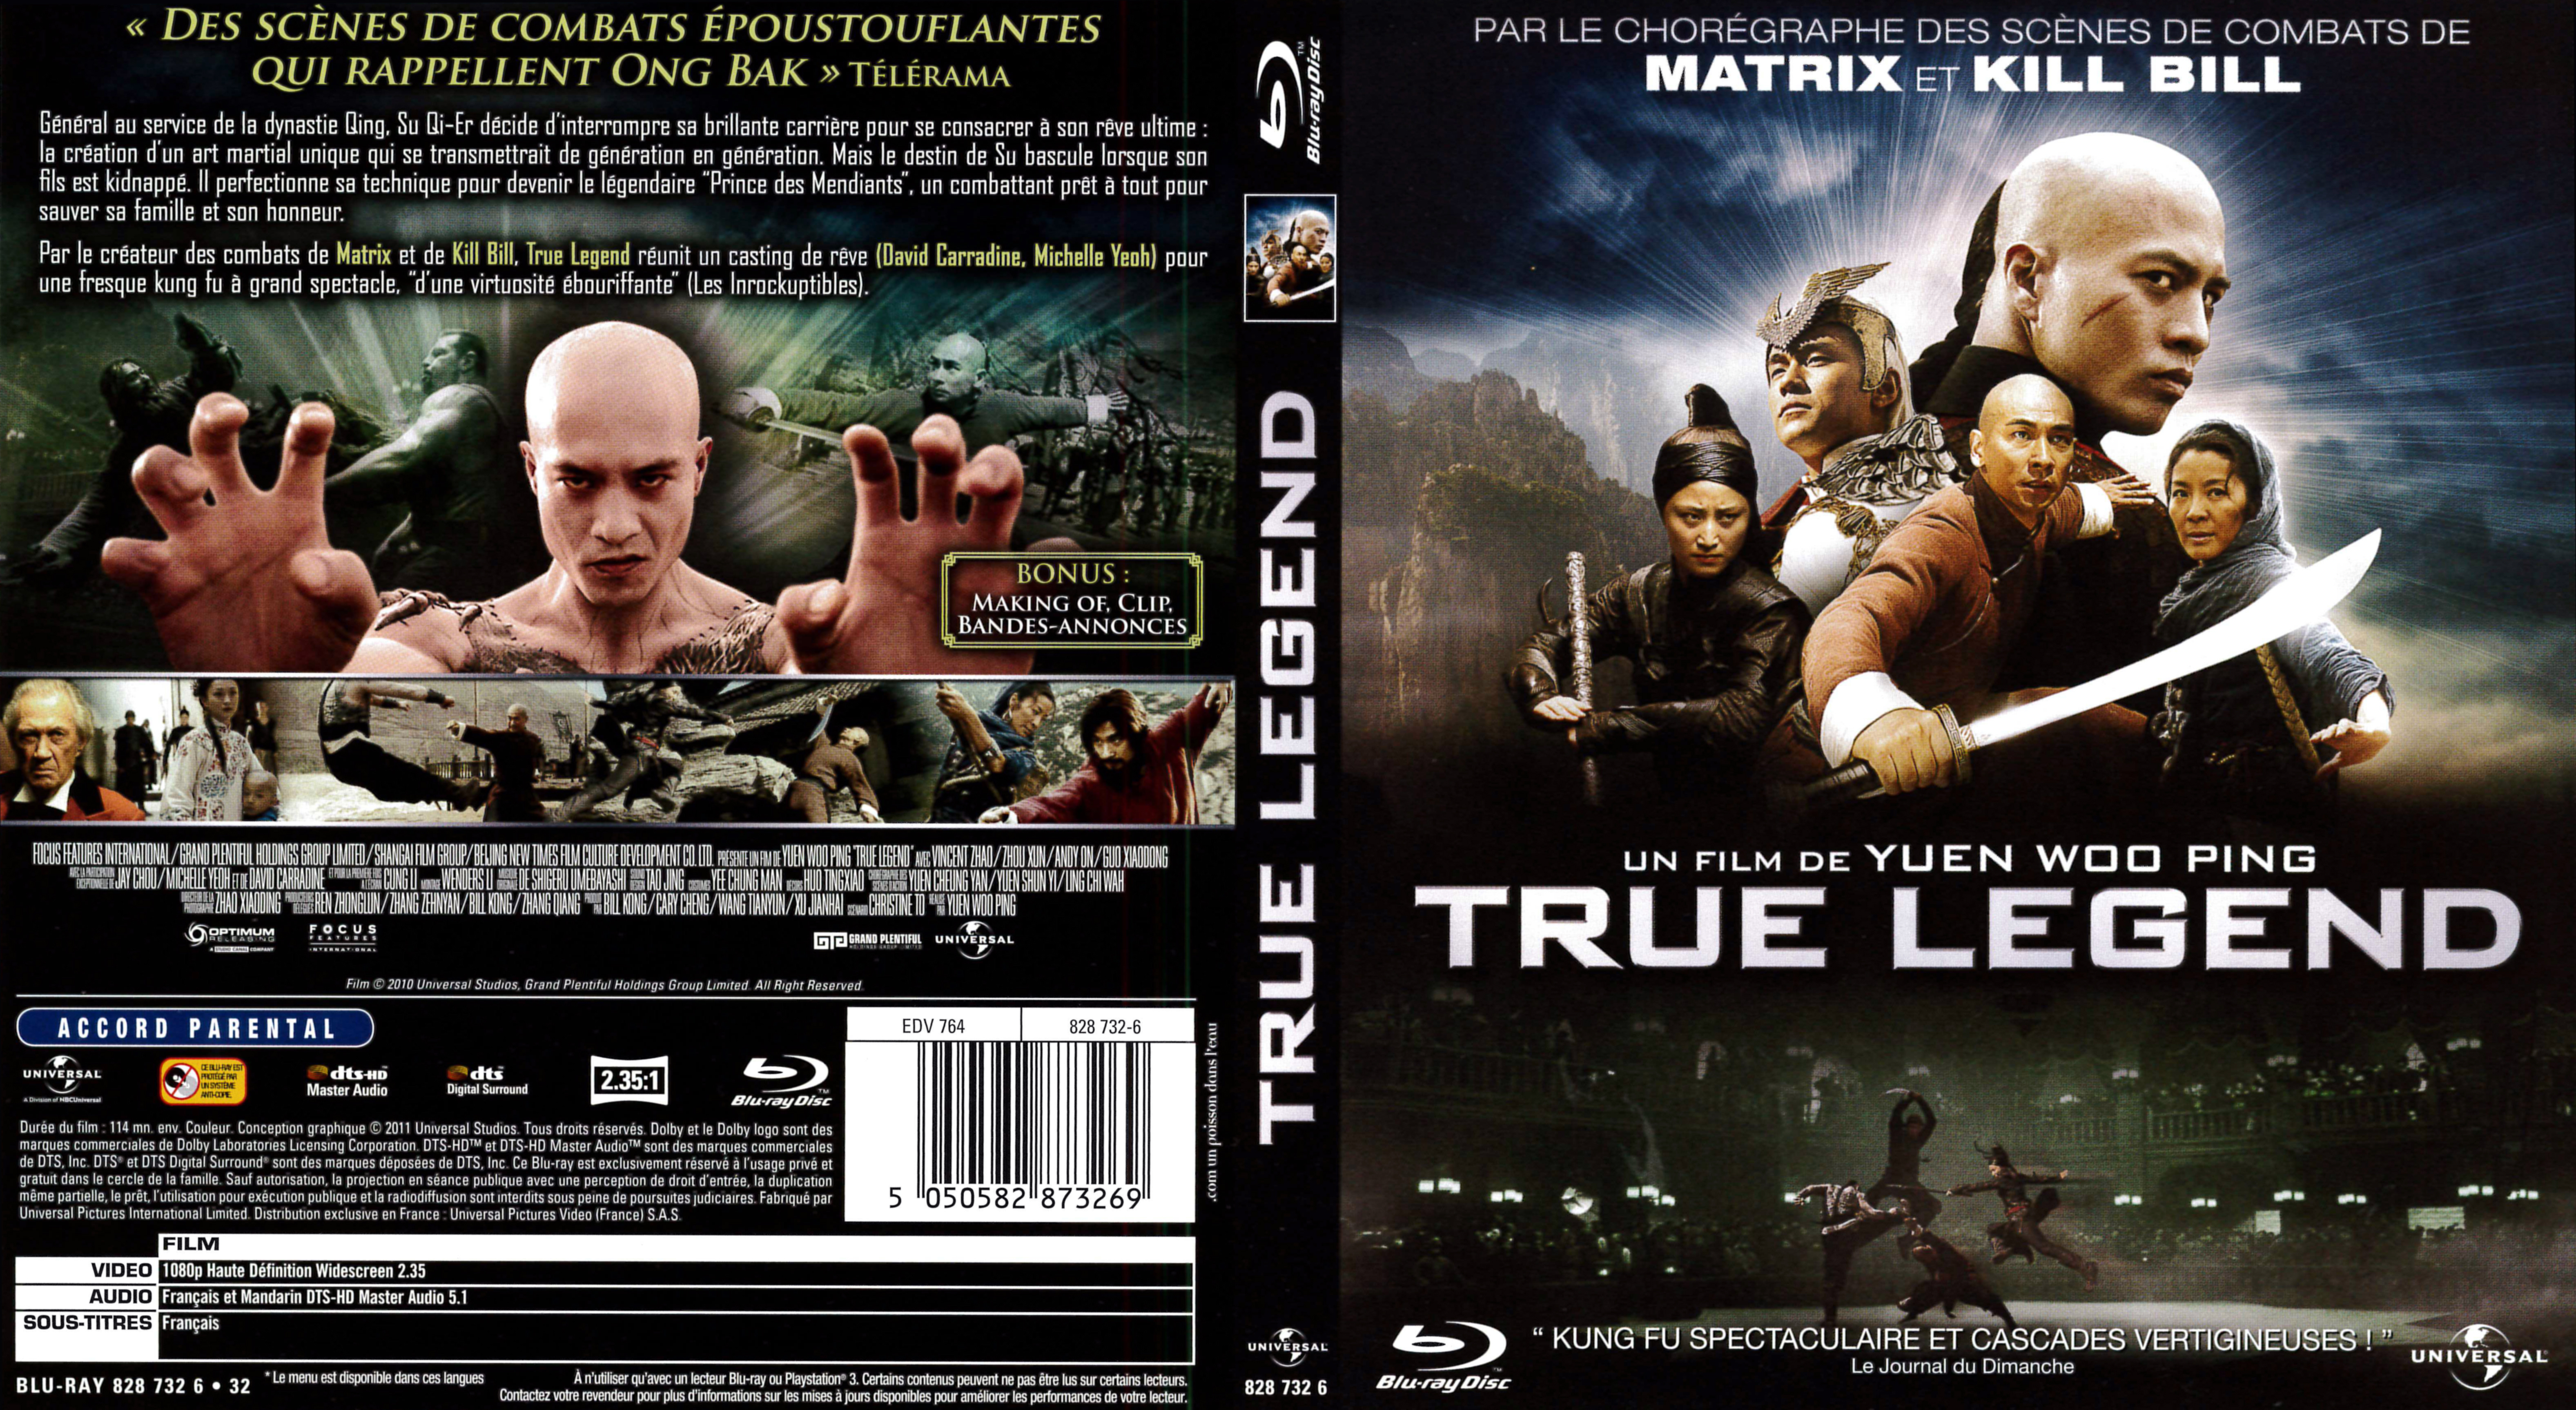 Jaquette DVD True Legend (BLU-RAY)